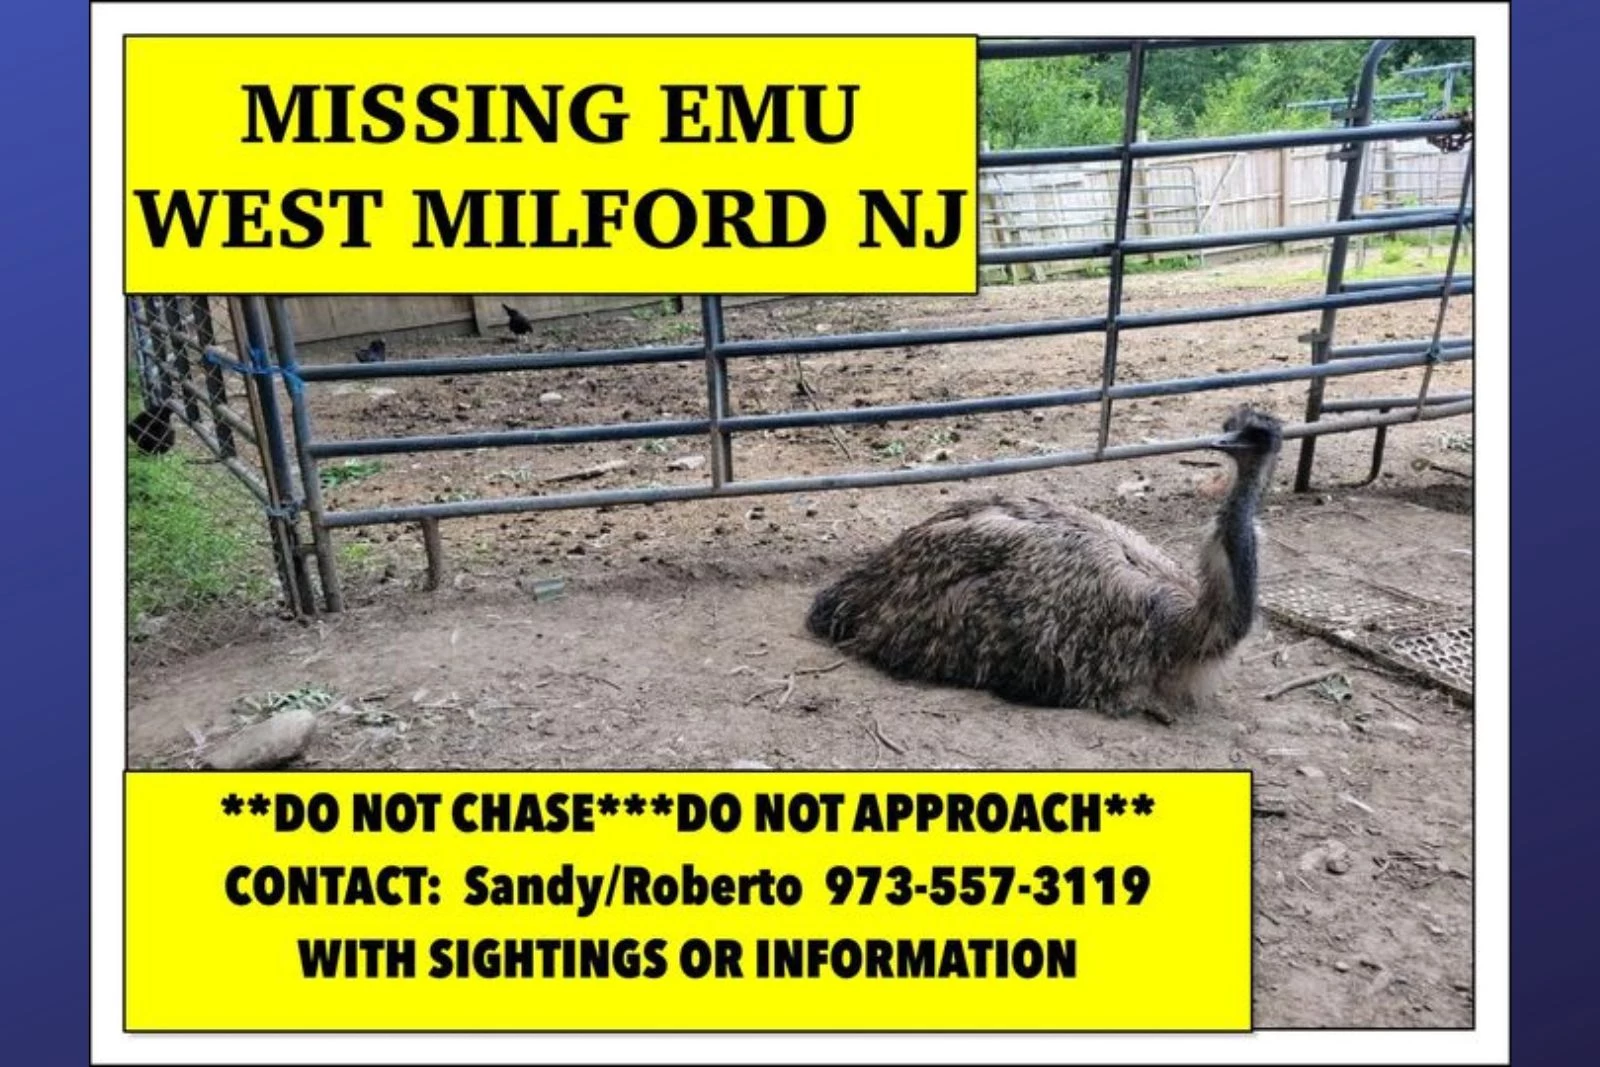 Wrak Kilimanjaro kosten Lost emu escapes West Milford, NJ farm; remains missing